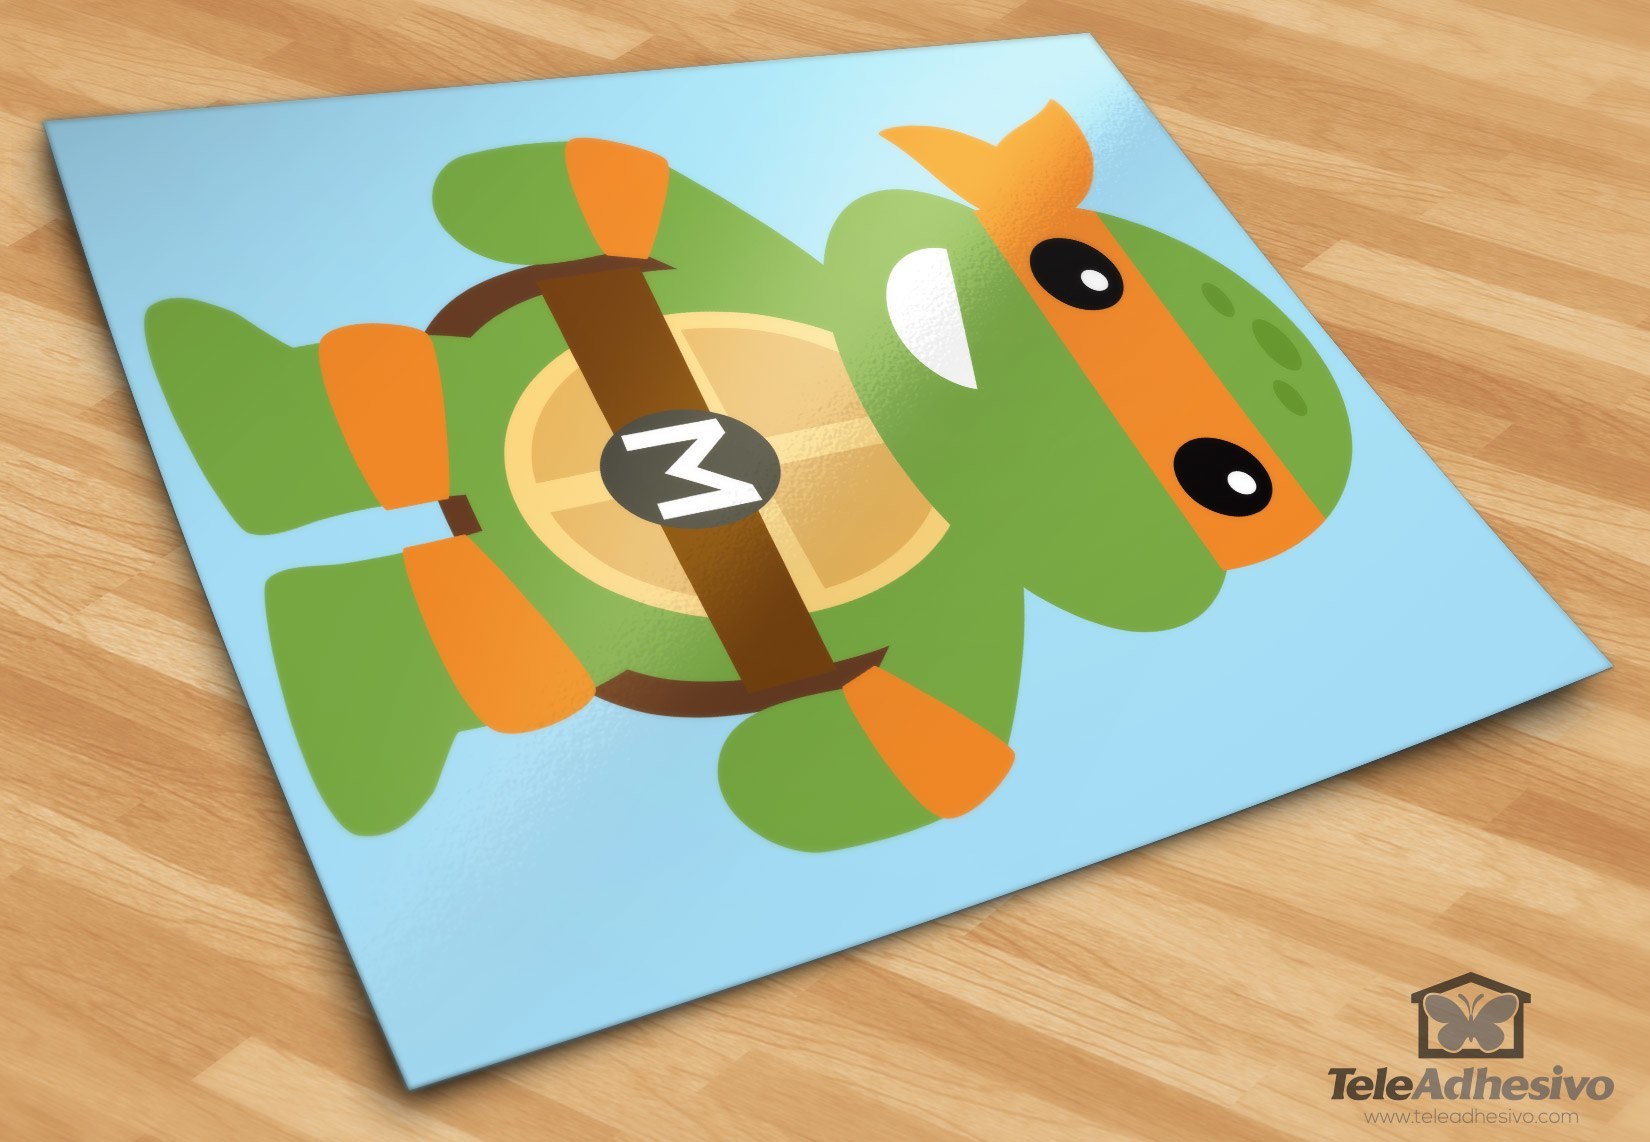 Kinderzimmer Wandtattoo: Michelangelo Ninja Schildkröte